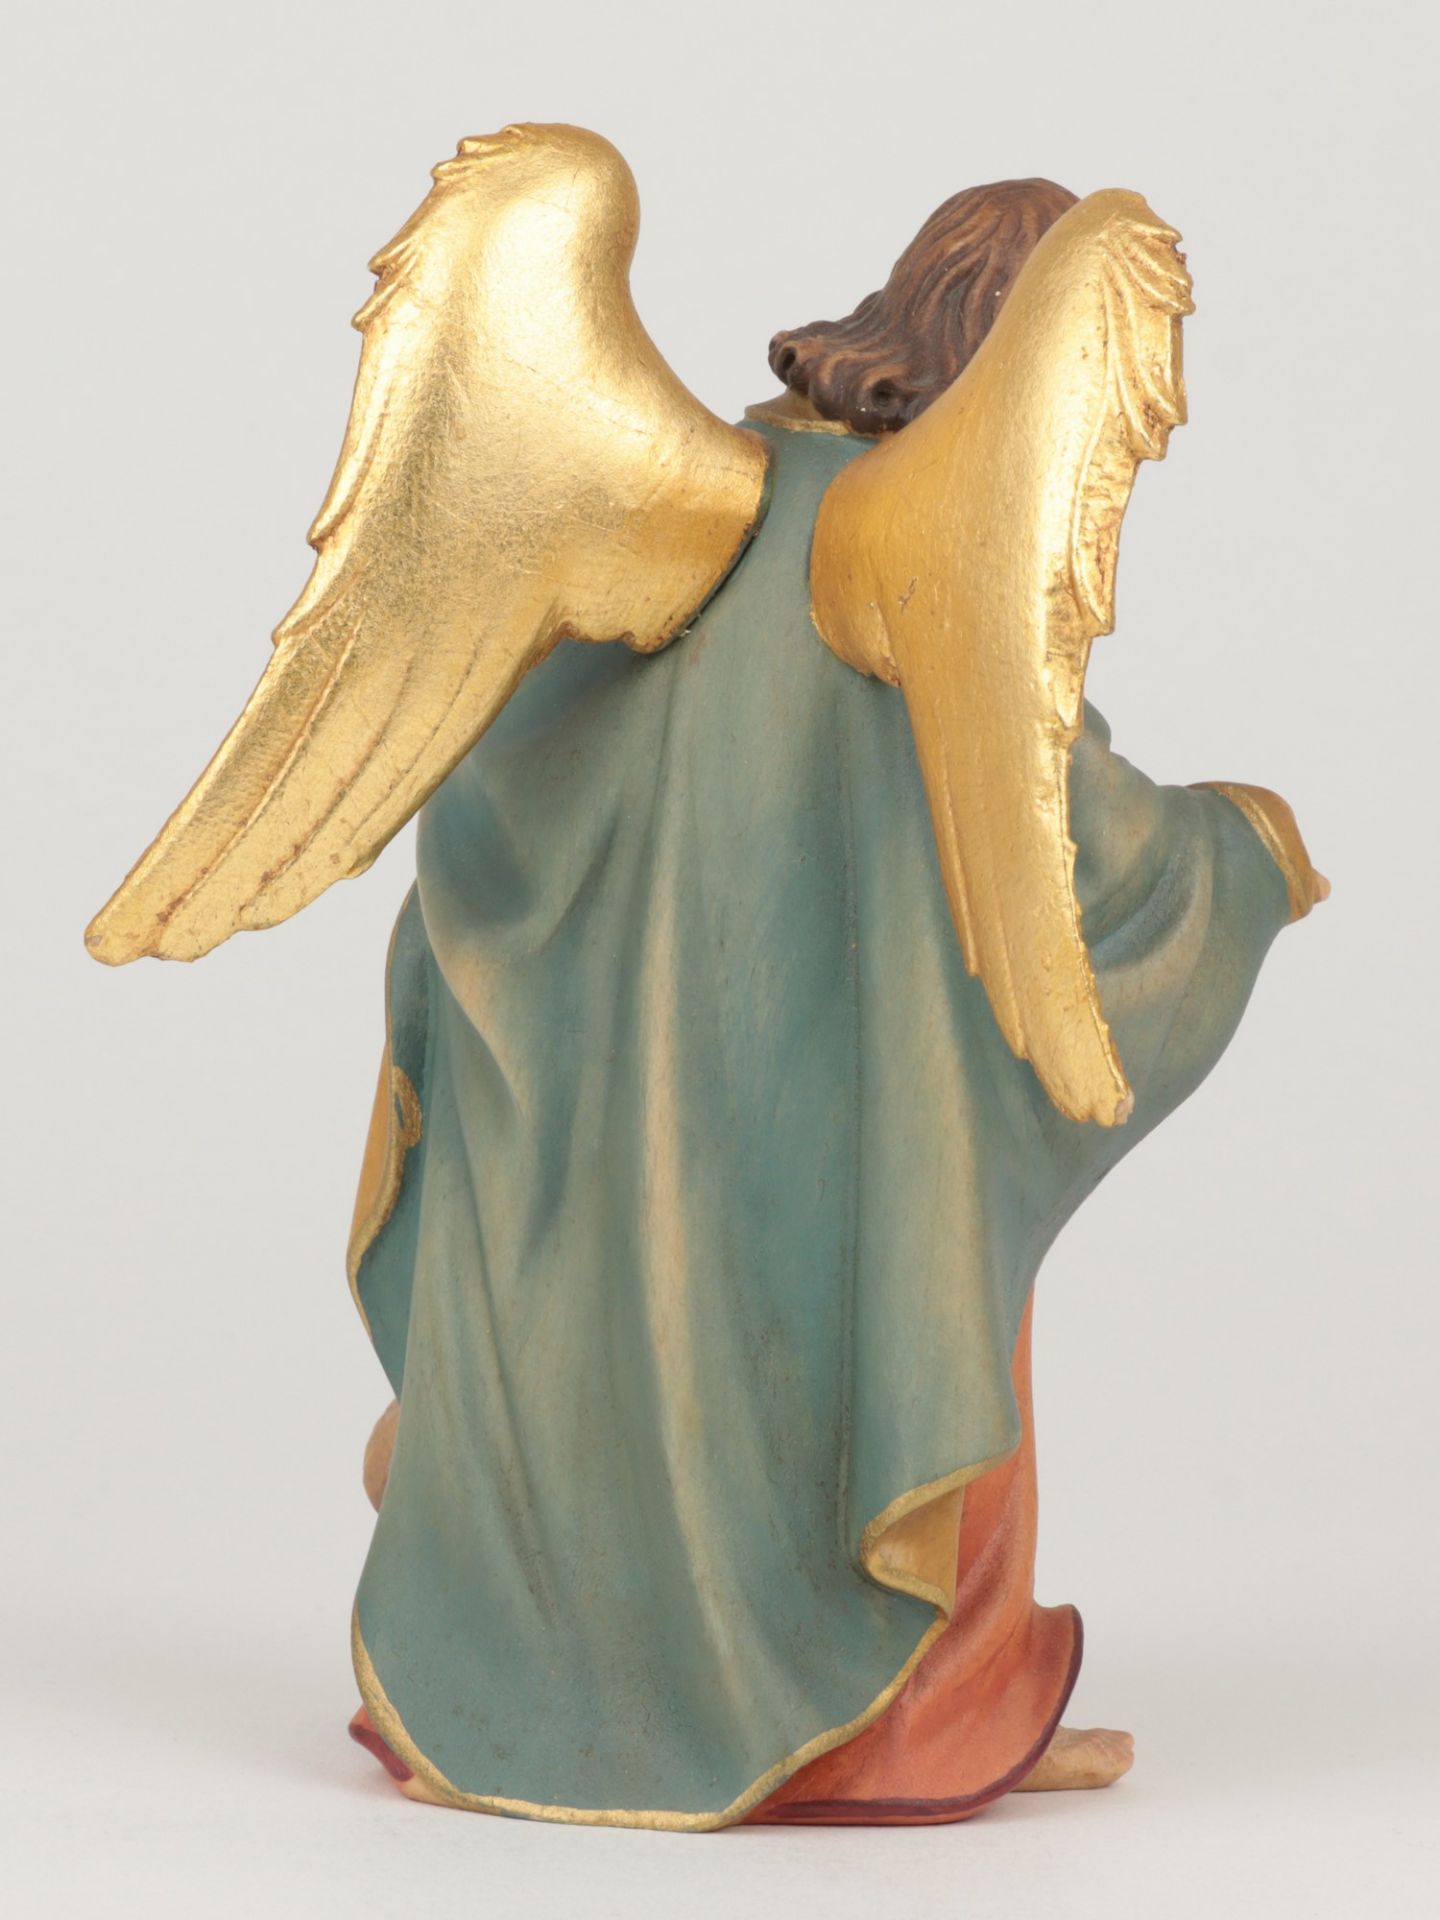 Krippenfigur - Südtirol Ewald Insam, Holz, geschnitzt, farbig bemalt, tlw. vergoldet, Engel mit - Image 2 of 5